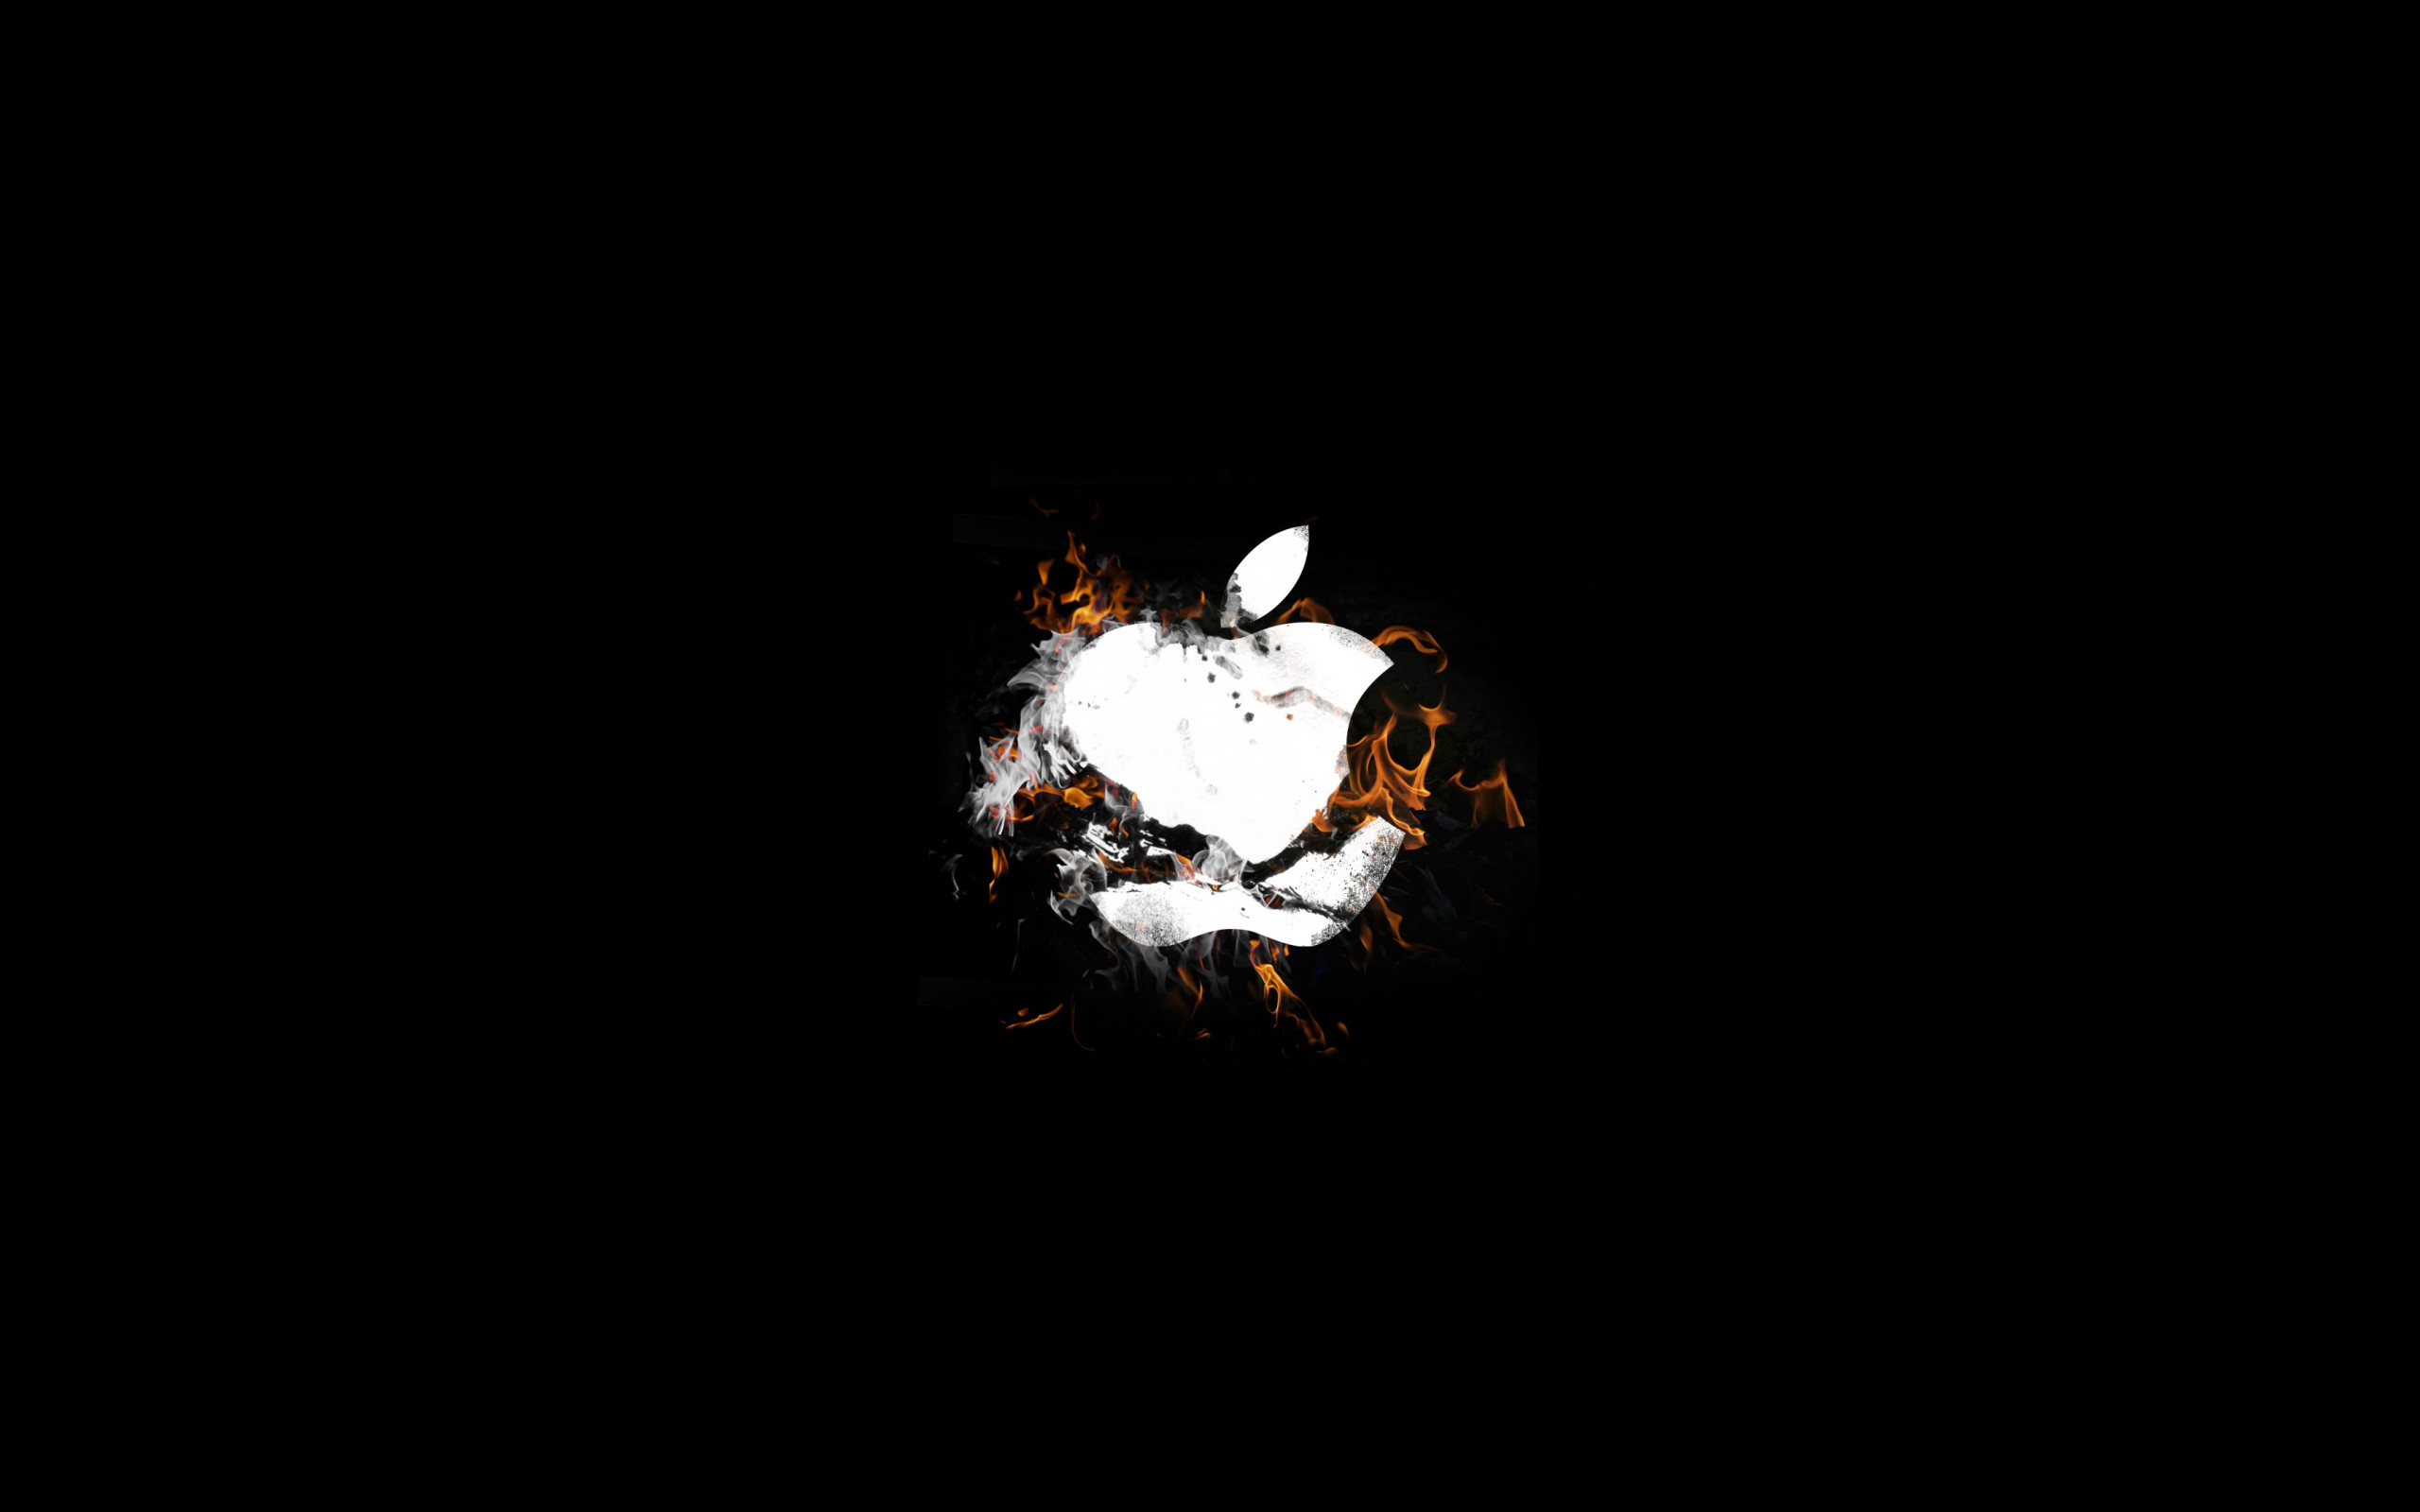 The Apple is on fire wallpaper 2560x1600